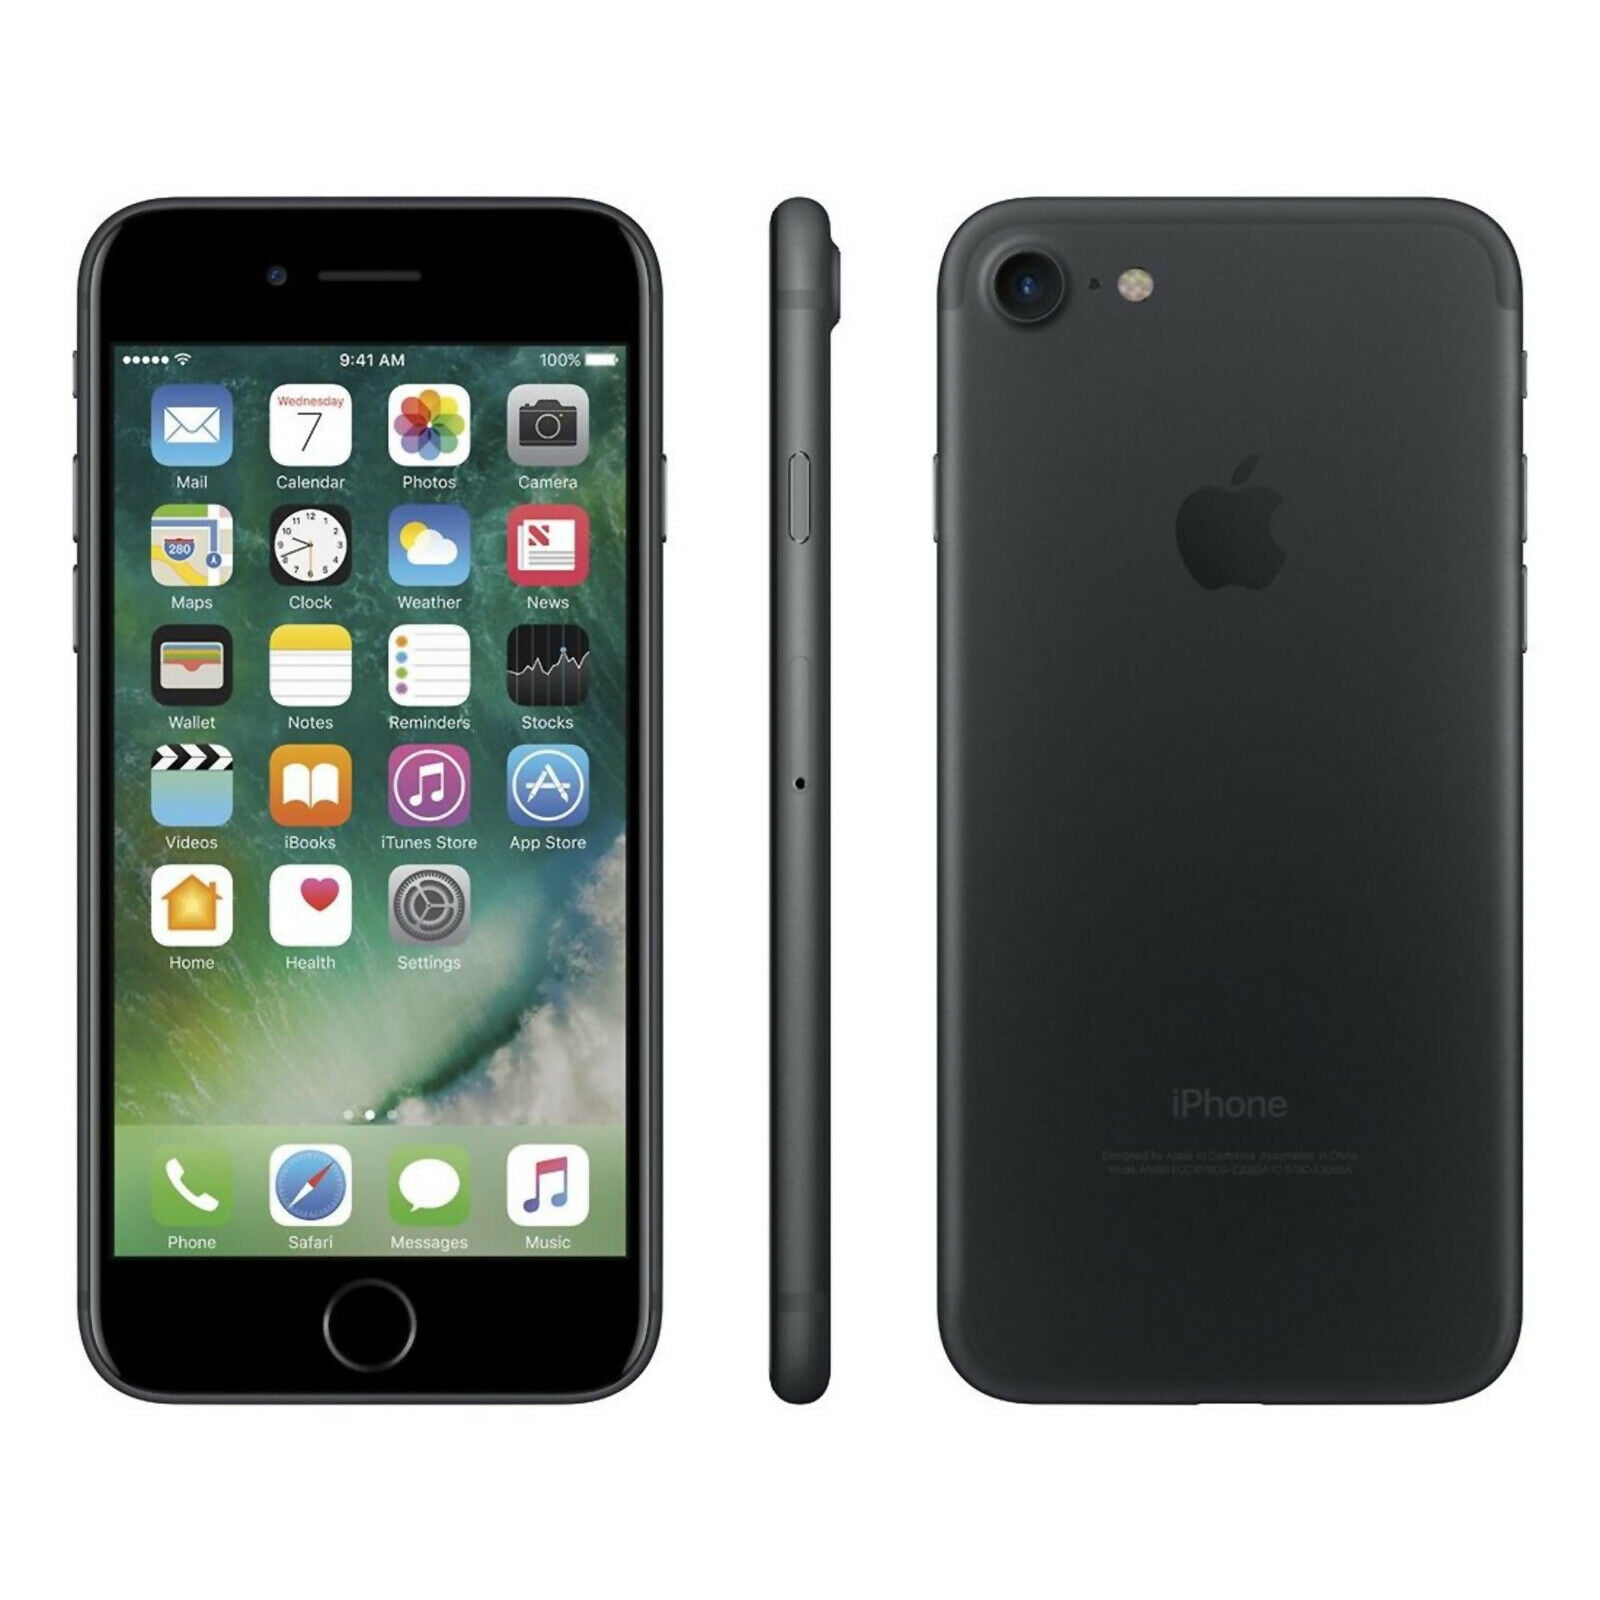 Beneden afronden Verbeteren apotheek Restored Apple iPhone 7 A1660 128 GB Smartphone, 4.7" LCD HD 1334 x 750,  Dual-core (2 Core) Dual-core (2 Core), 2 GB RAM, iOS 10, 4G, Black  (Refurbished) - Walmart.com